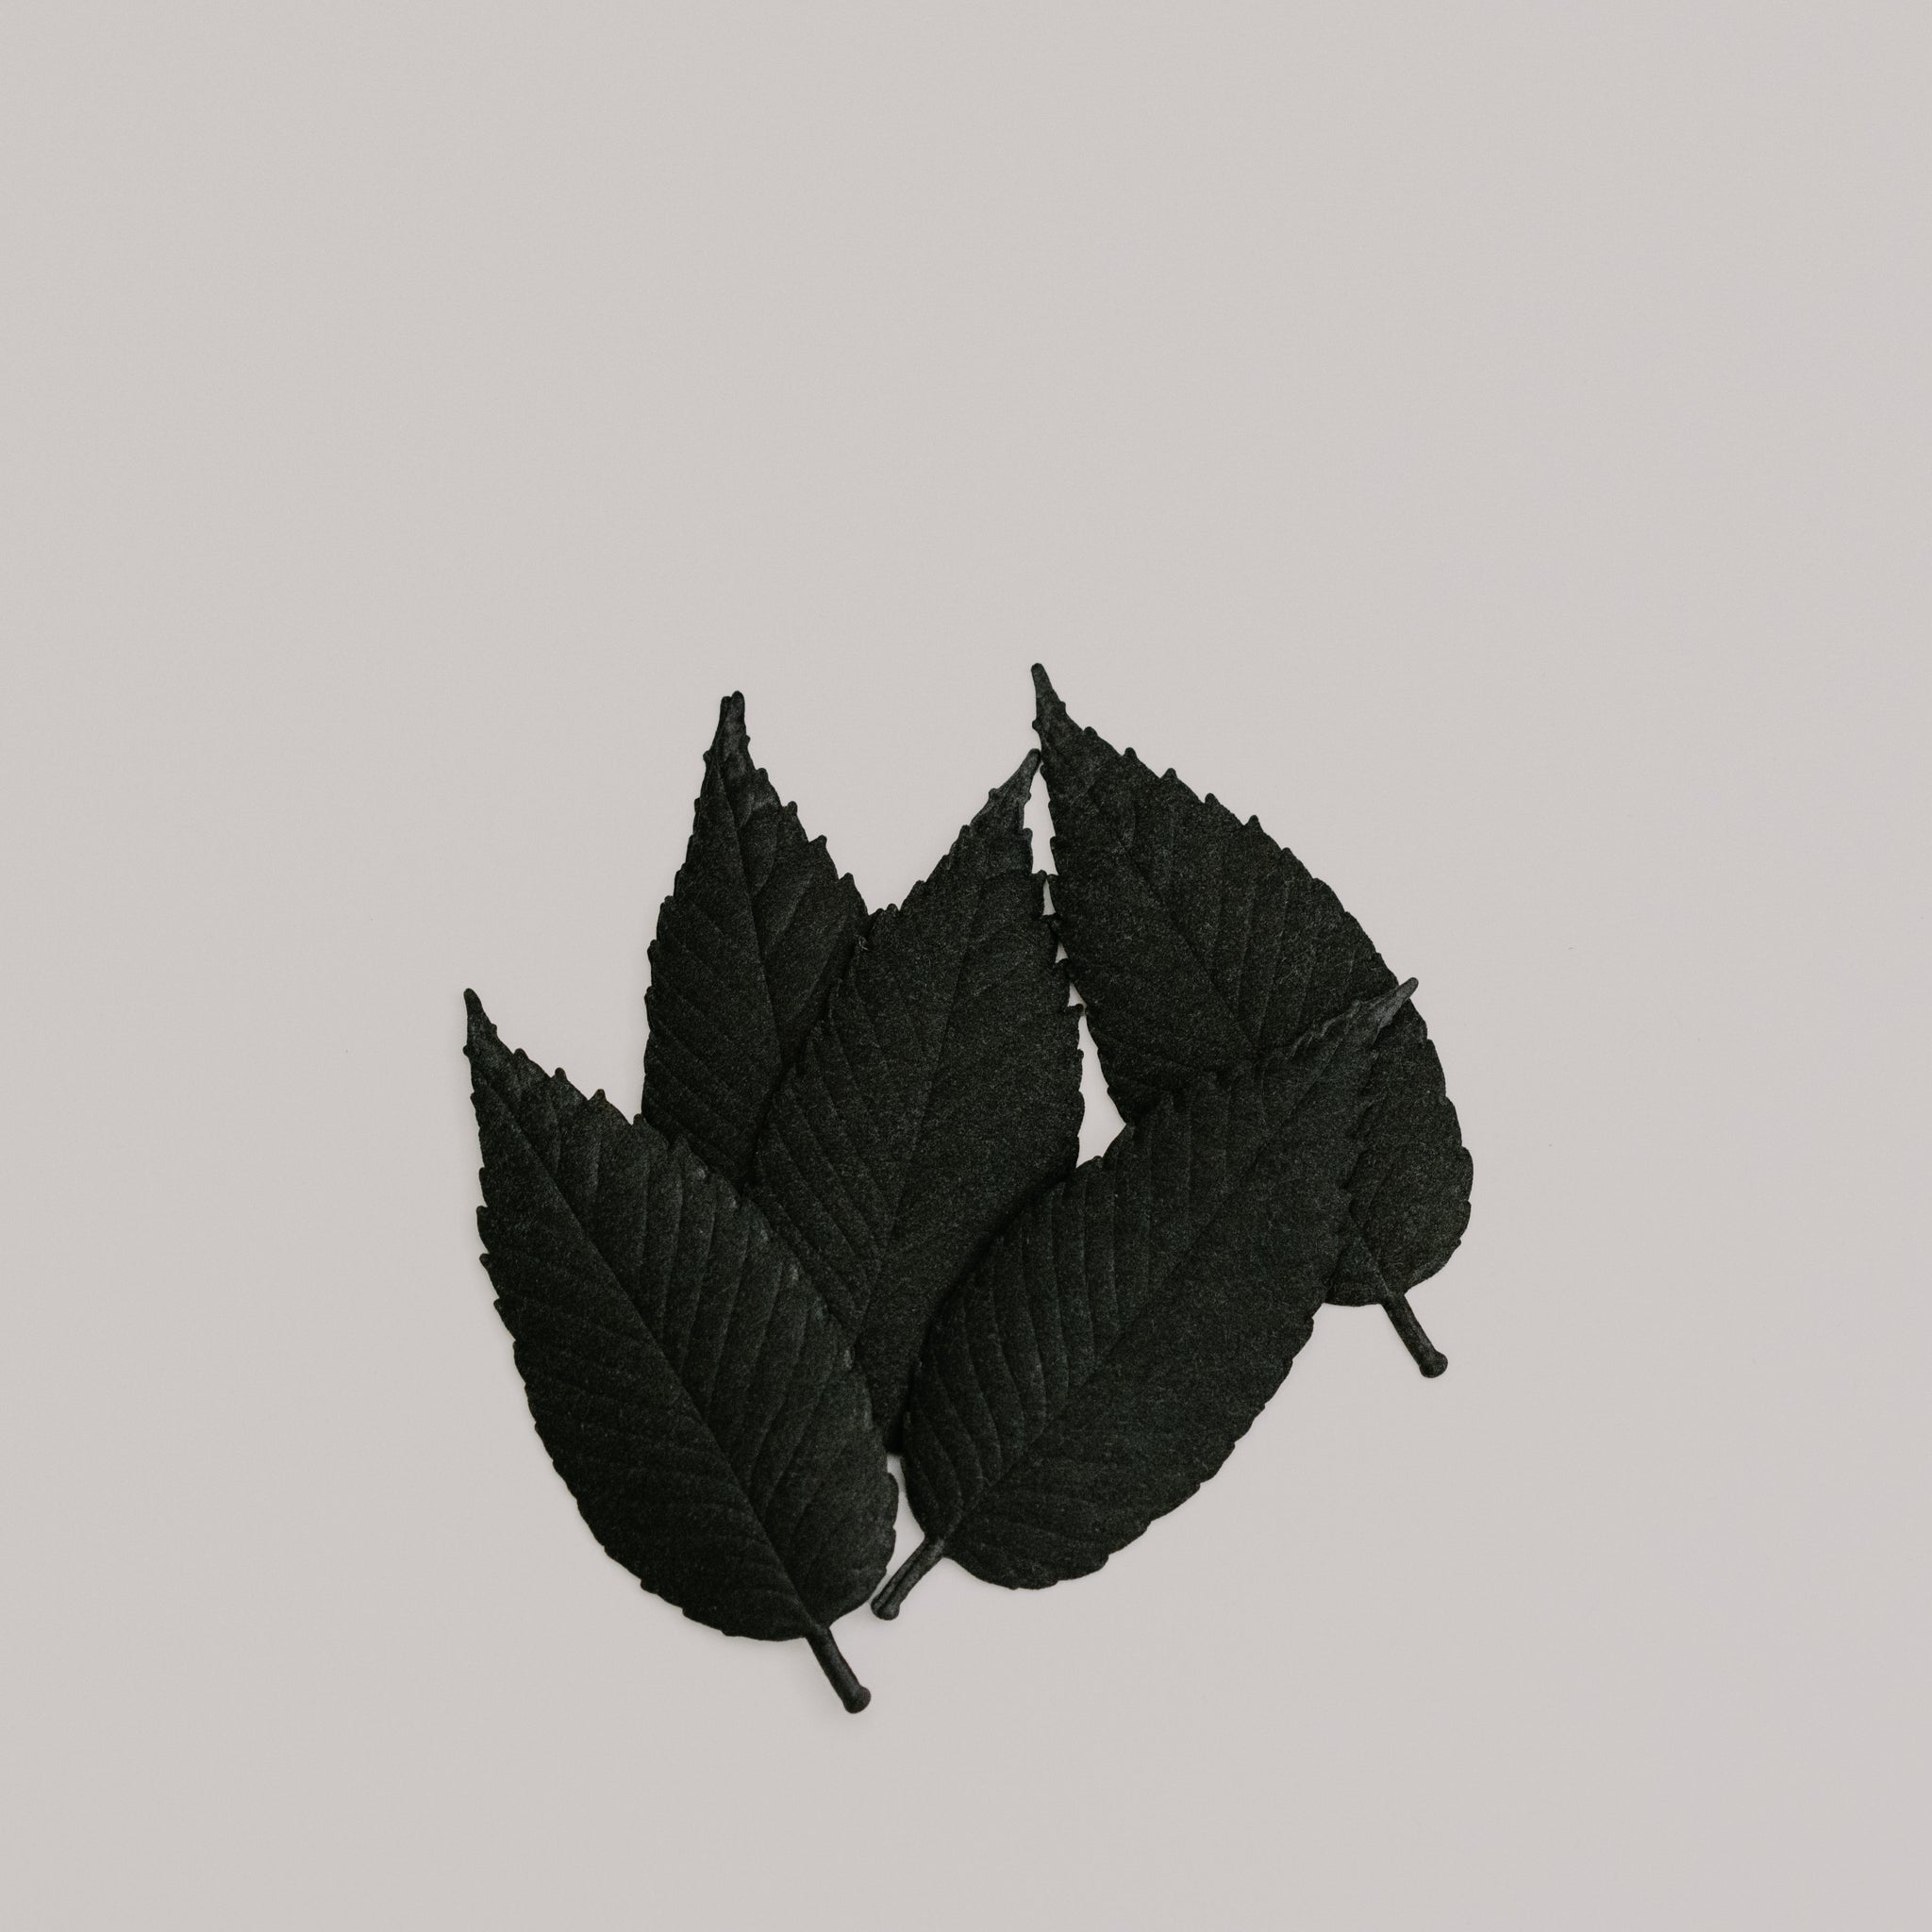 Encens HA KO – Coffret noir 6 feuilles